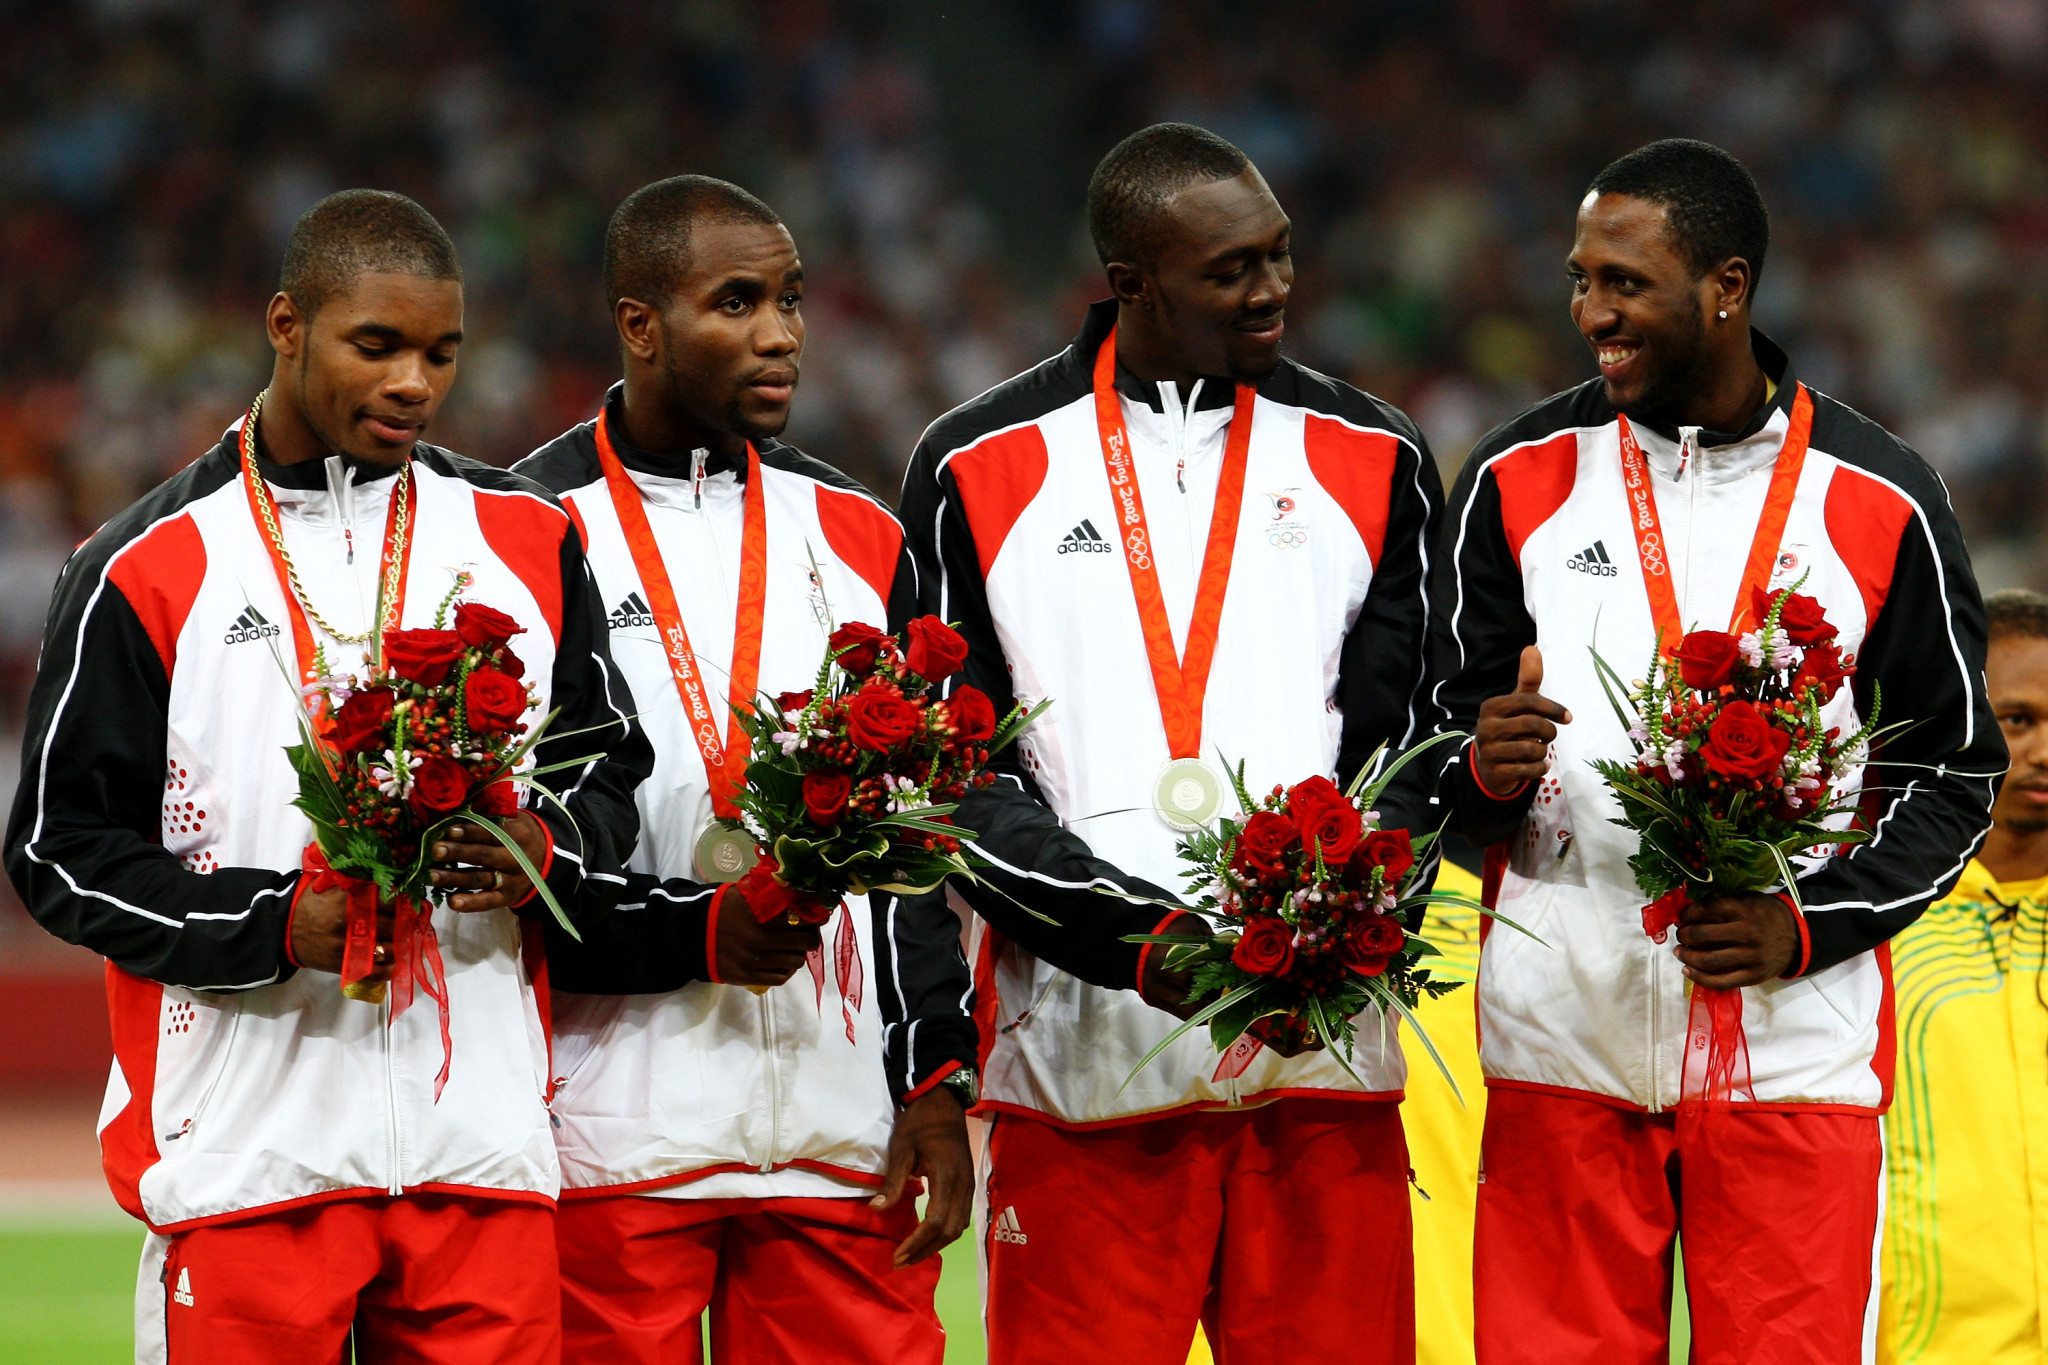 TTOC awards bonus to Beijing 2008 men’s relay squad following medal upgrade 